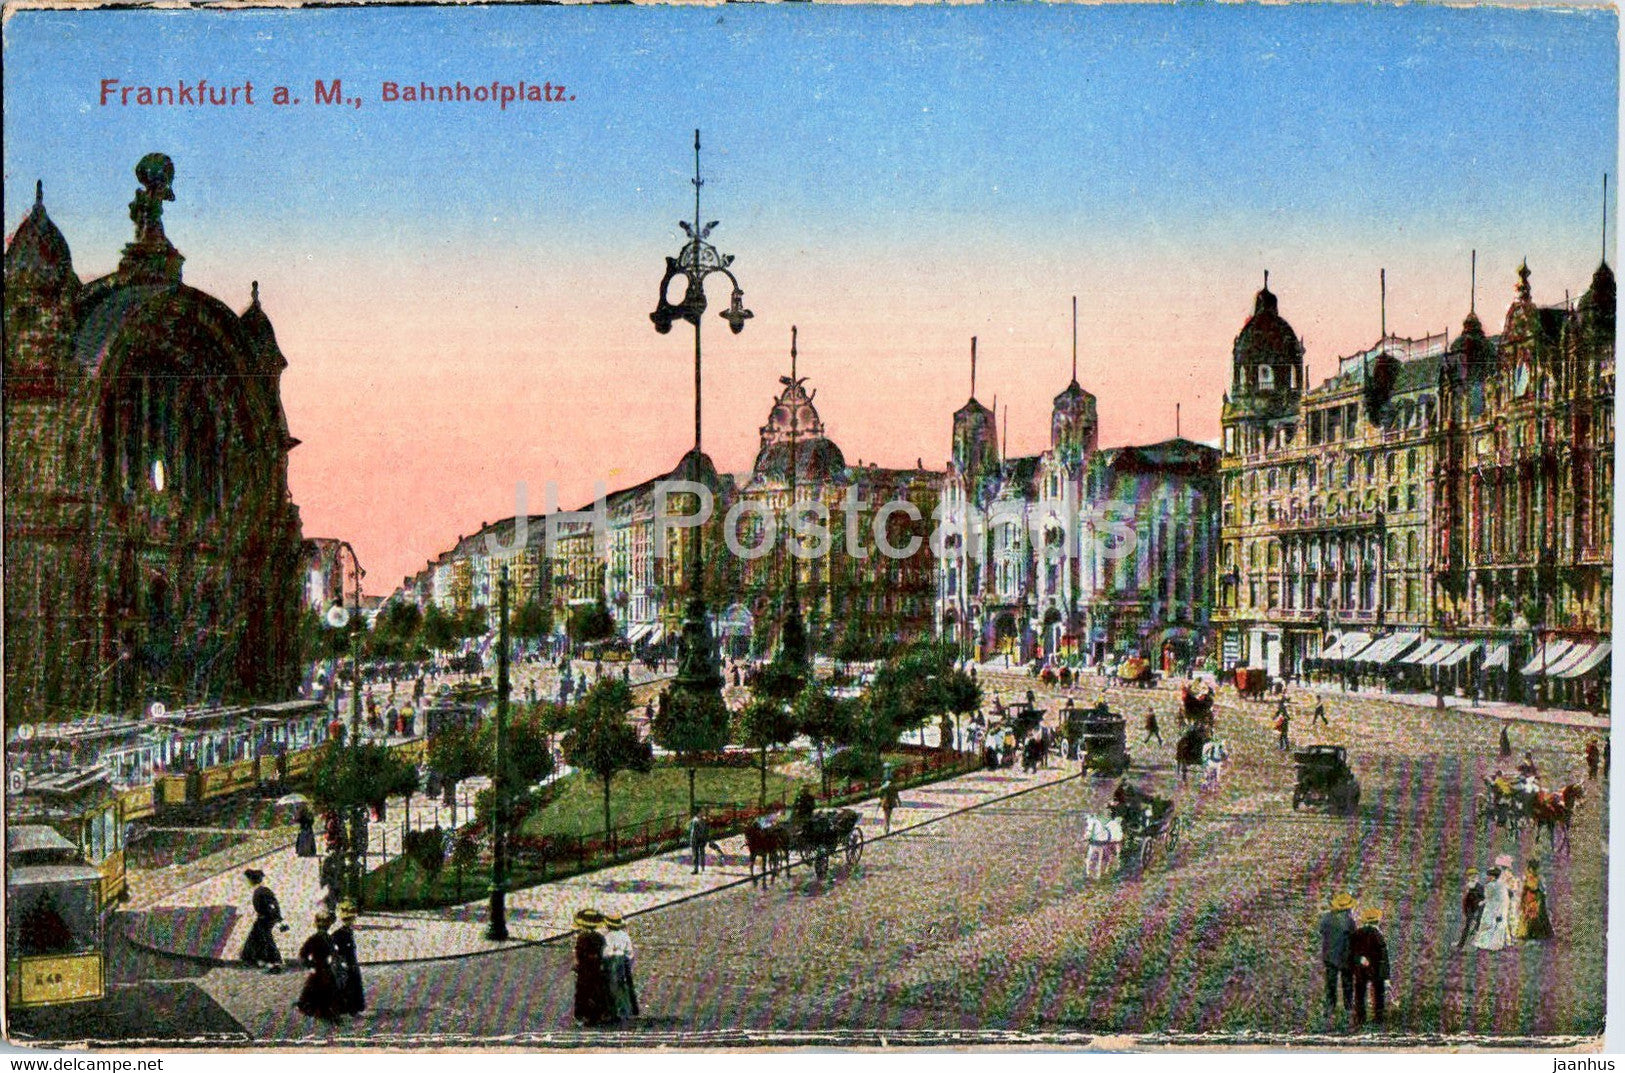 Frankfurt a M - Bahnhofplatz - tram - old postcard - Germany - unused - JH Postcards